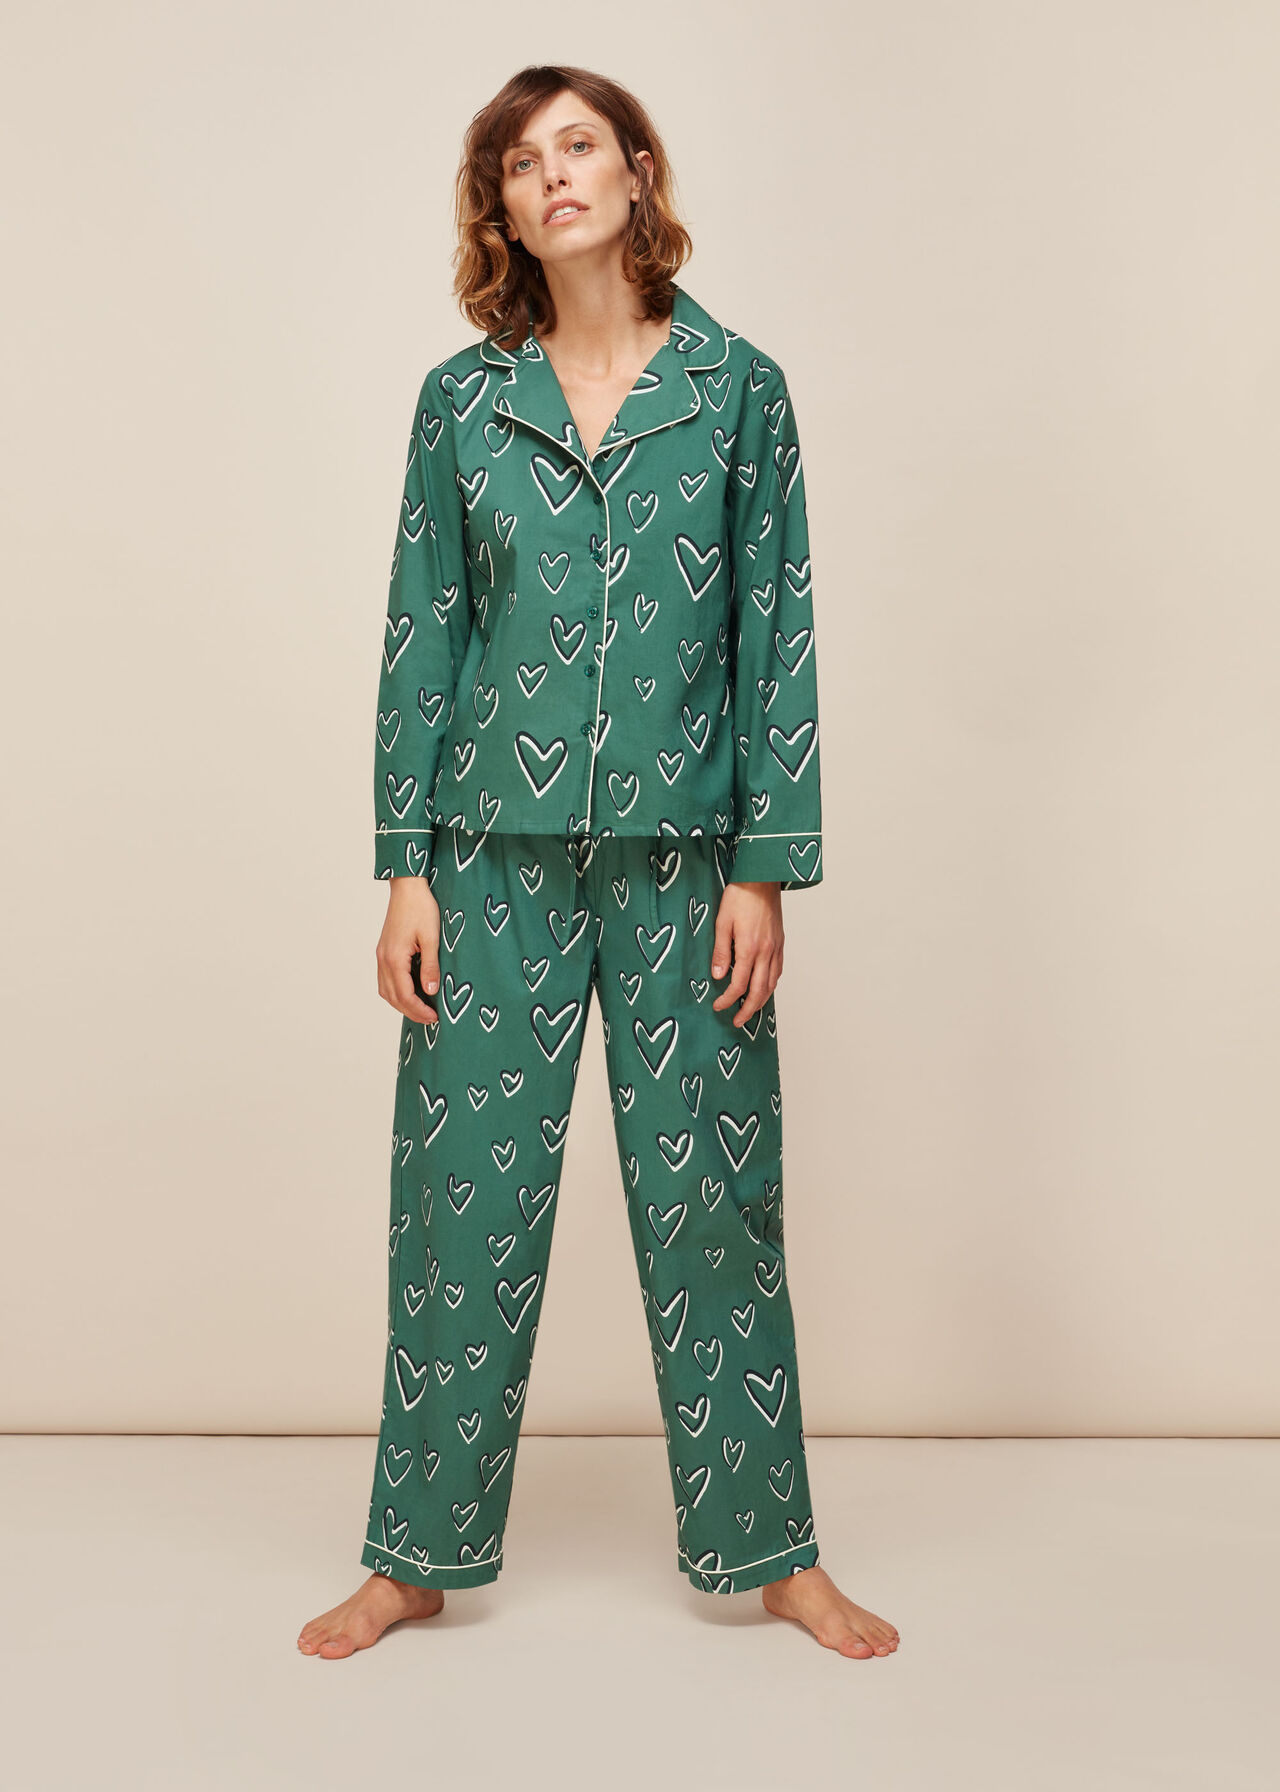 Print | WHISTLES Pyjama Heart Green/Multi Set Cotton |